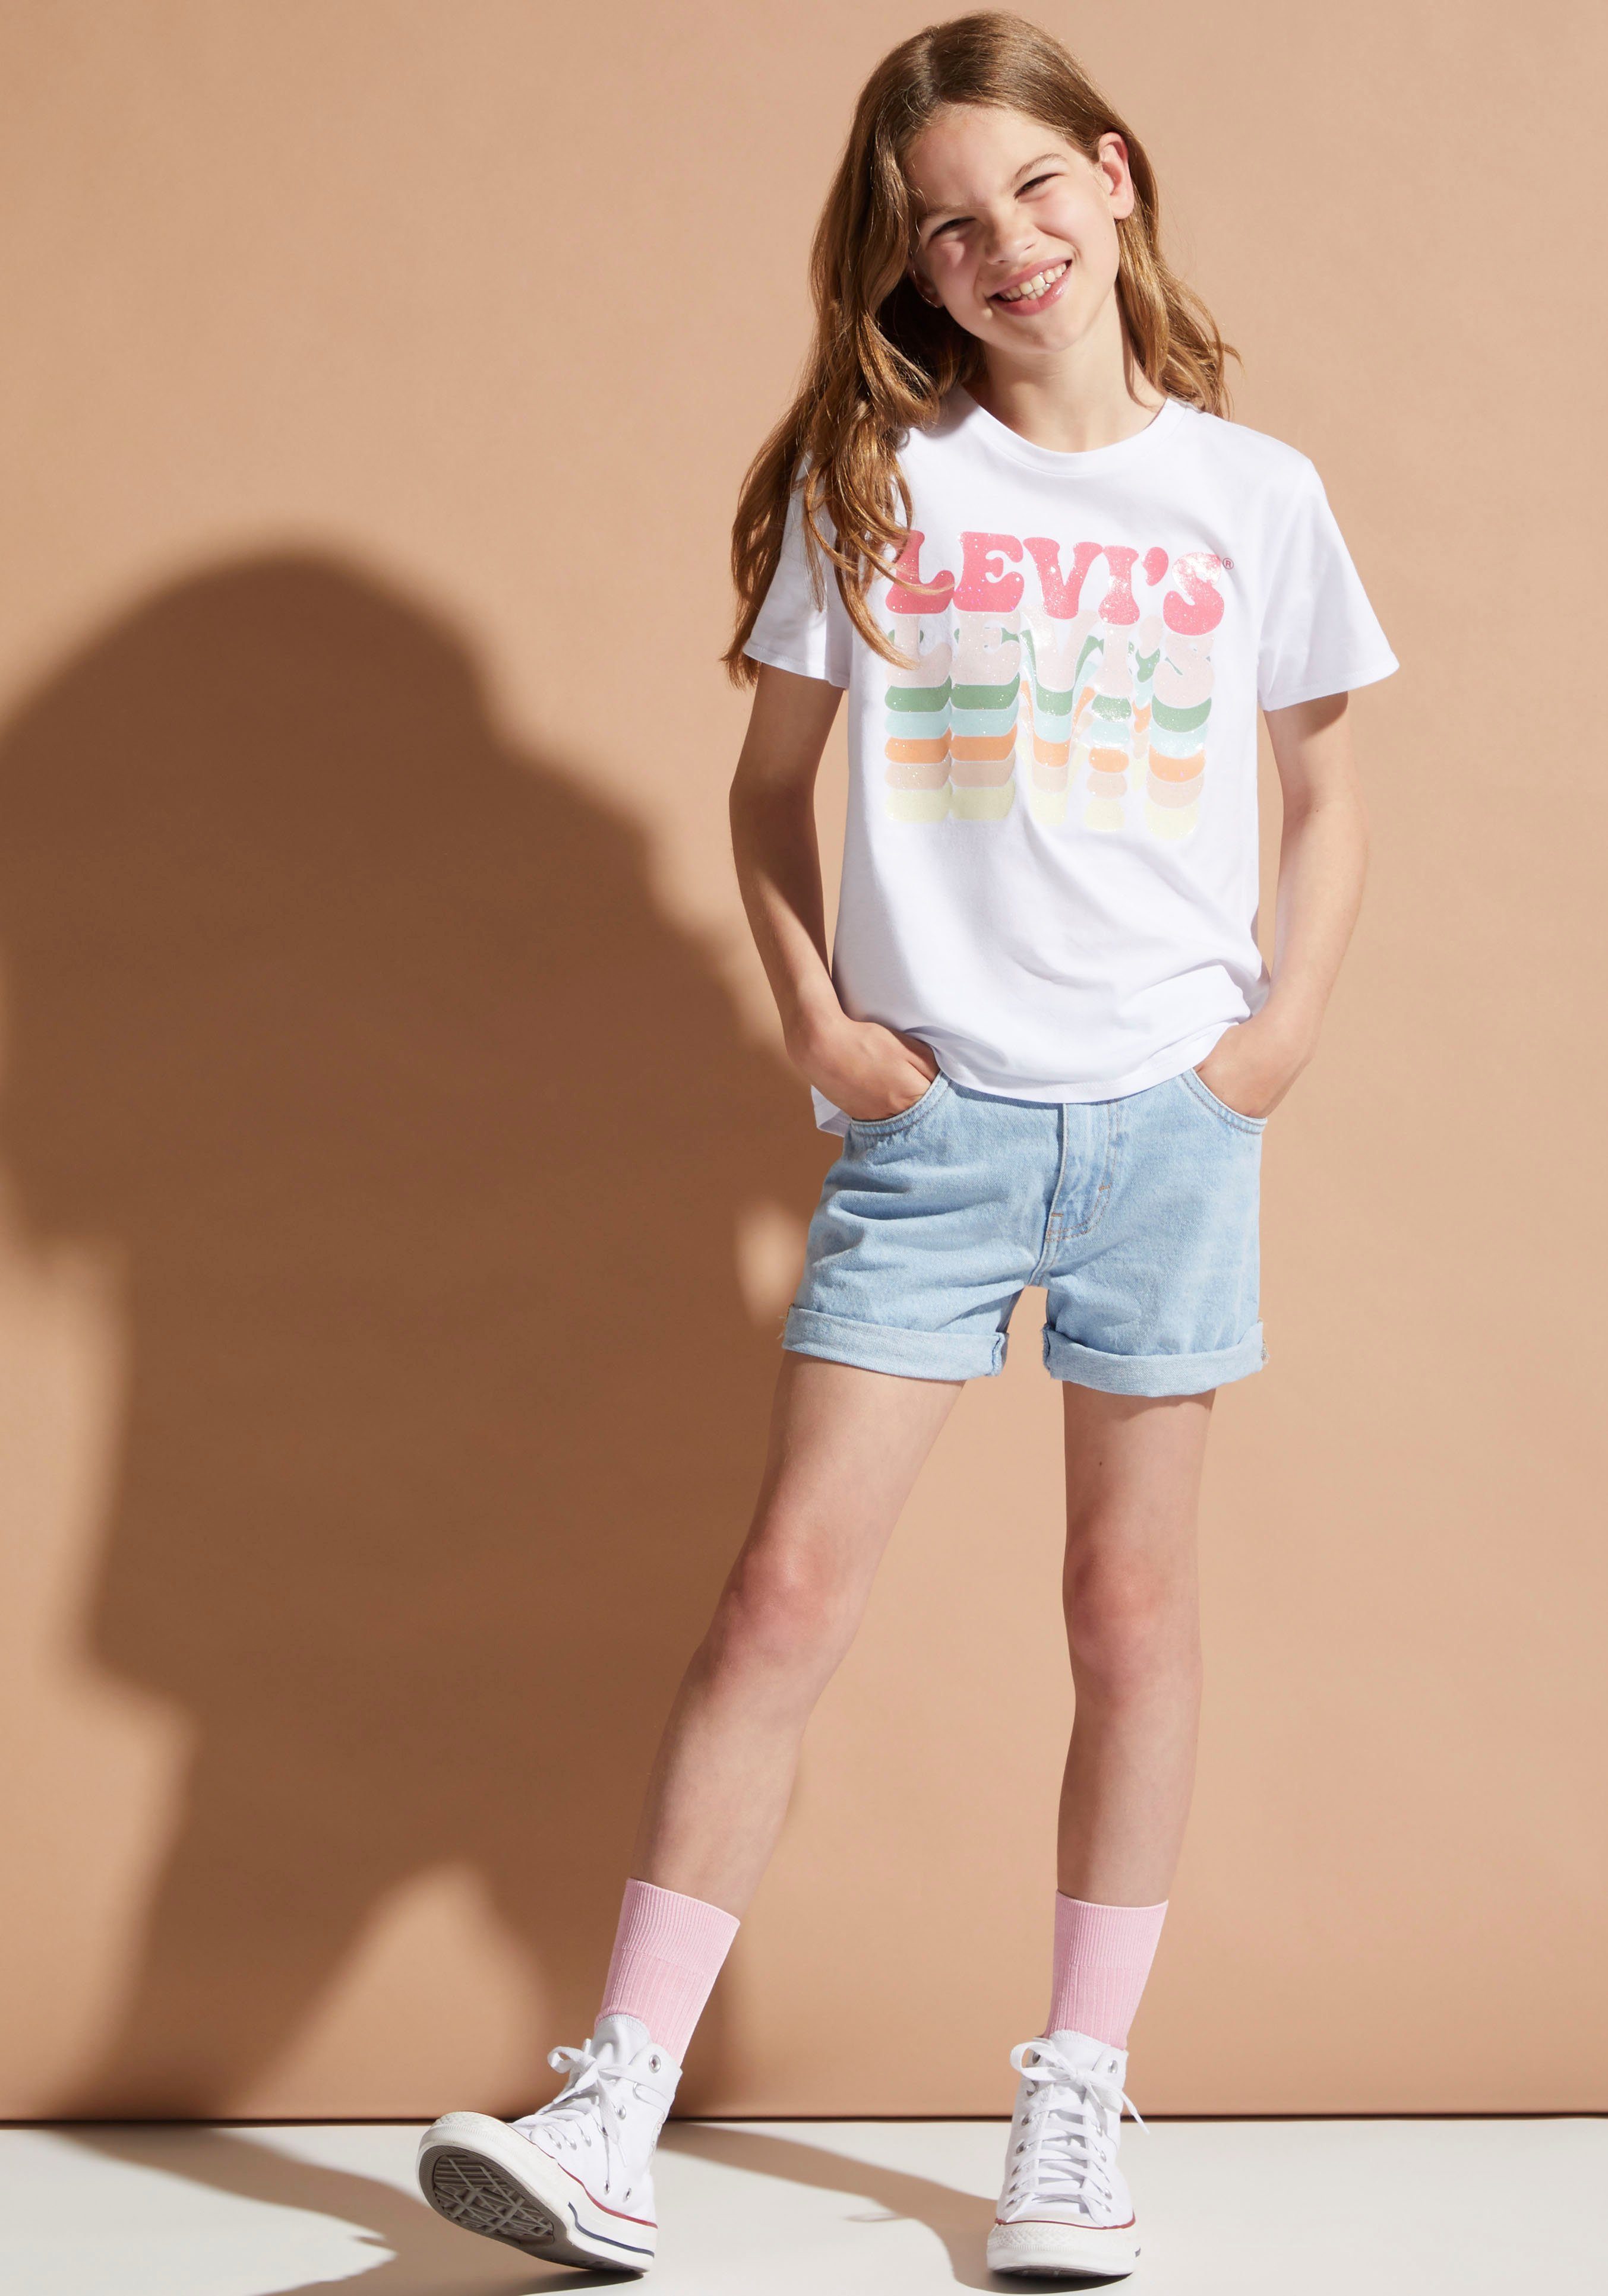 Levi's Kidswear T-shirt for girls